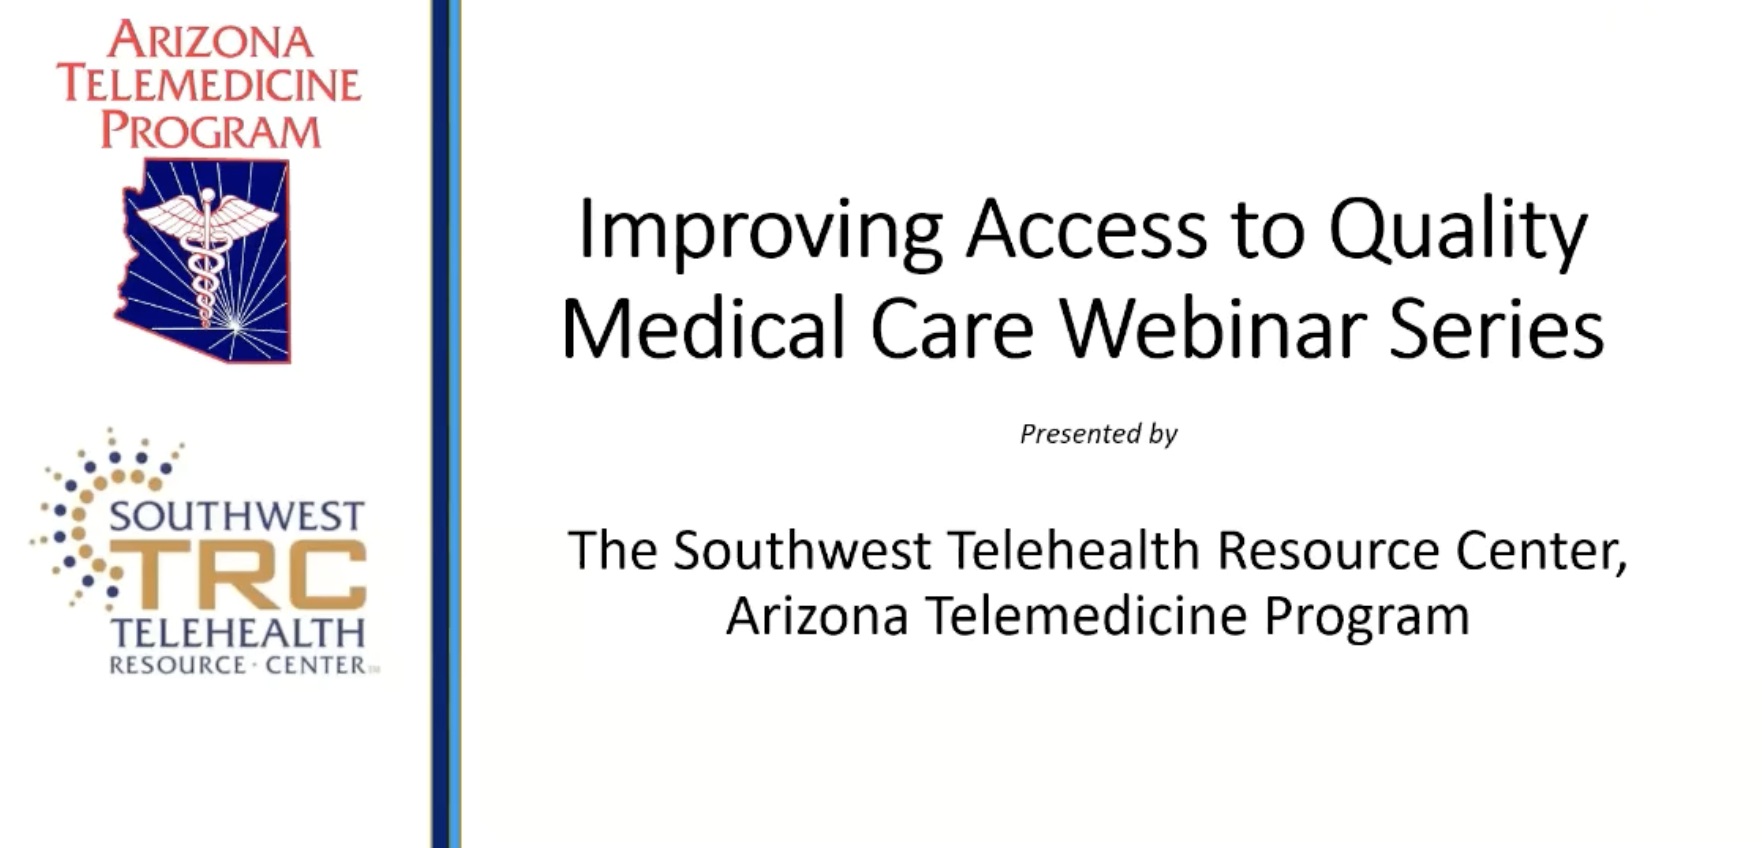 Implementation of Pediatric Behavioral Health Services through Telemedicine thumbnail image.